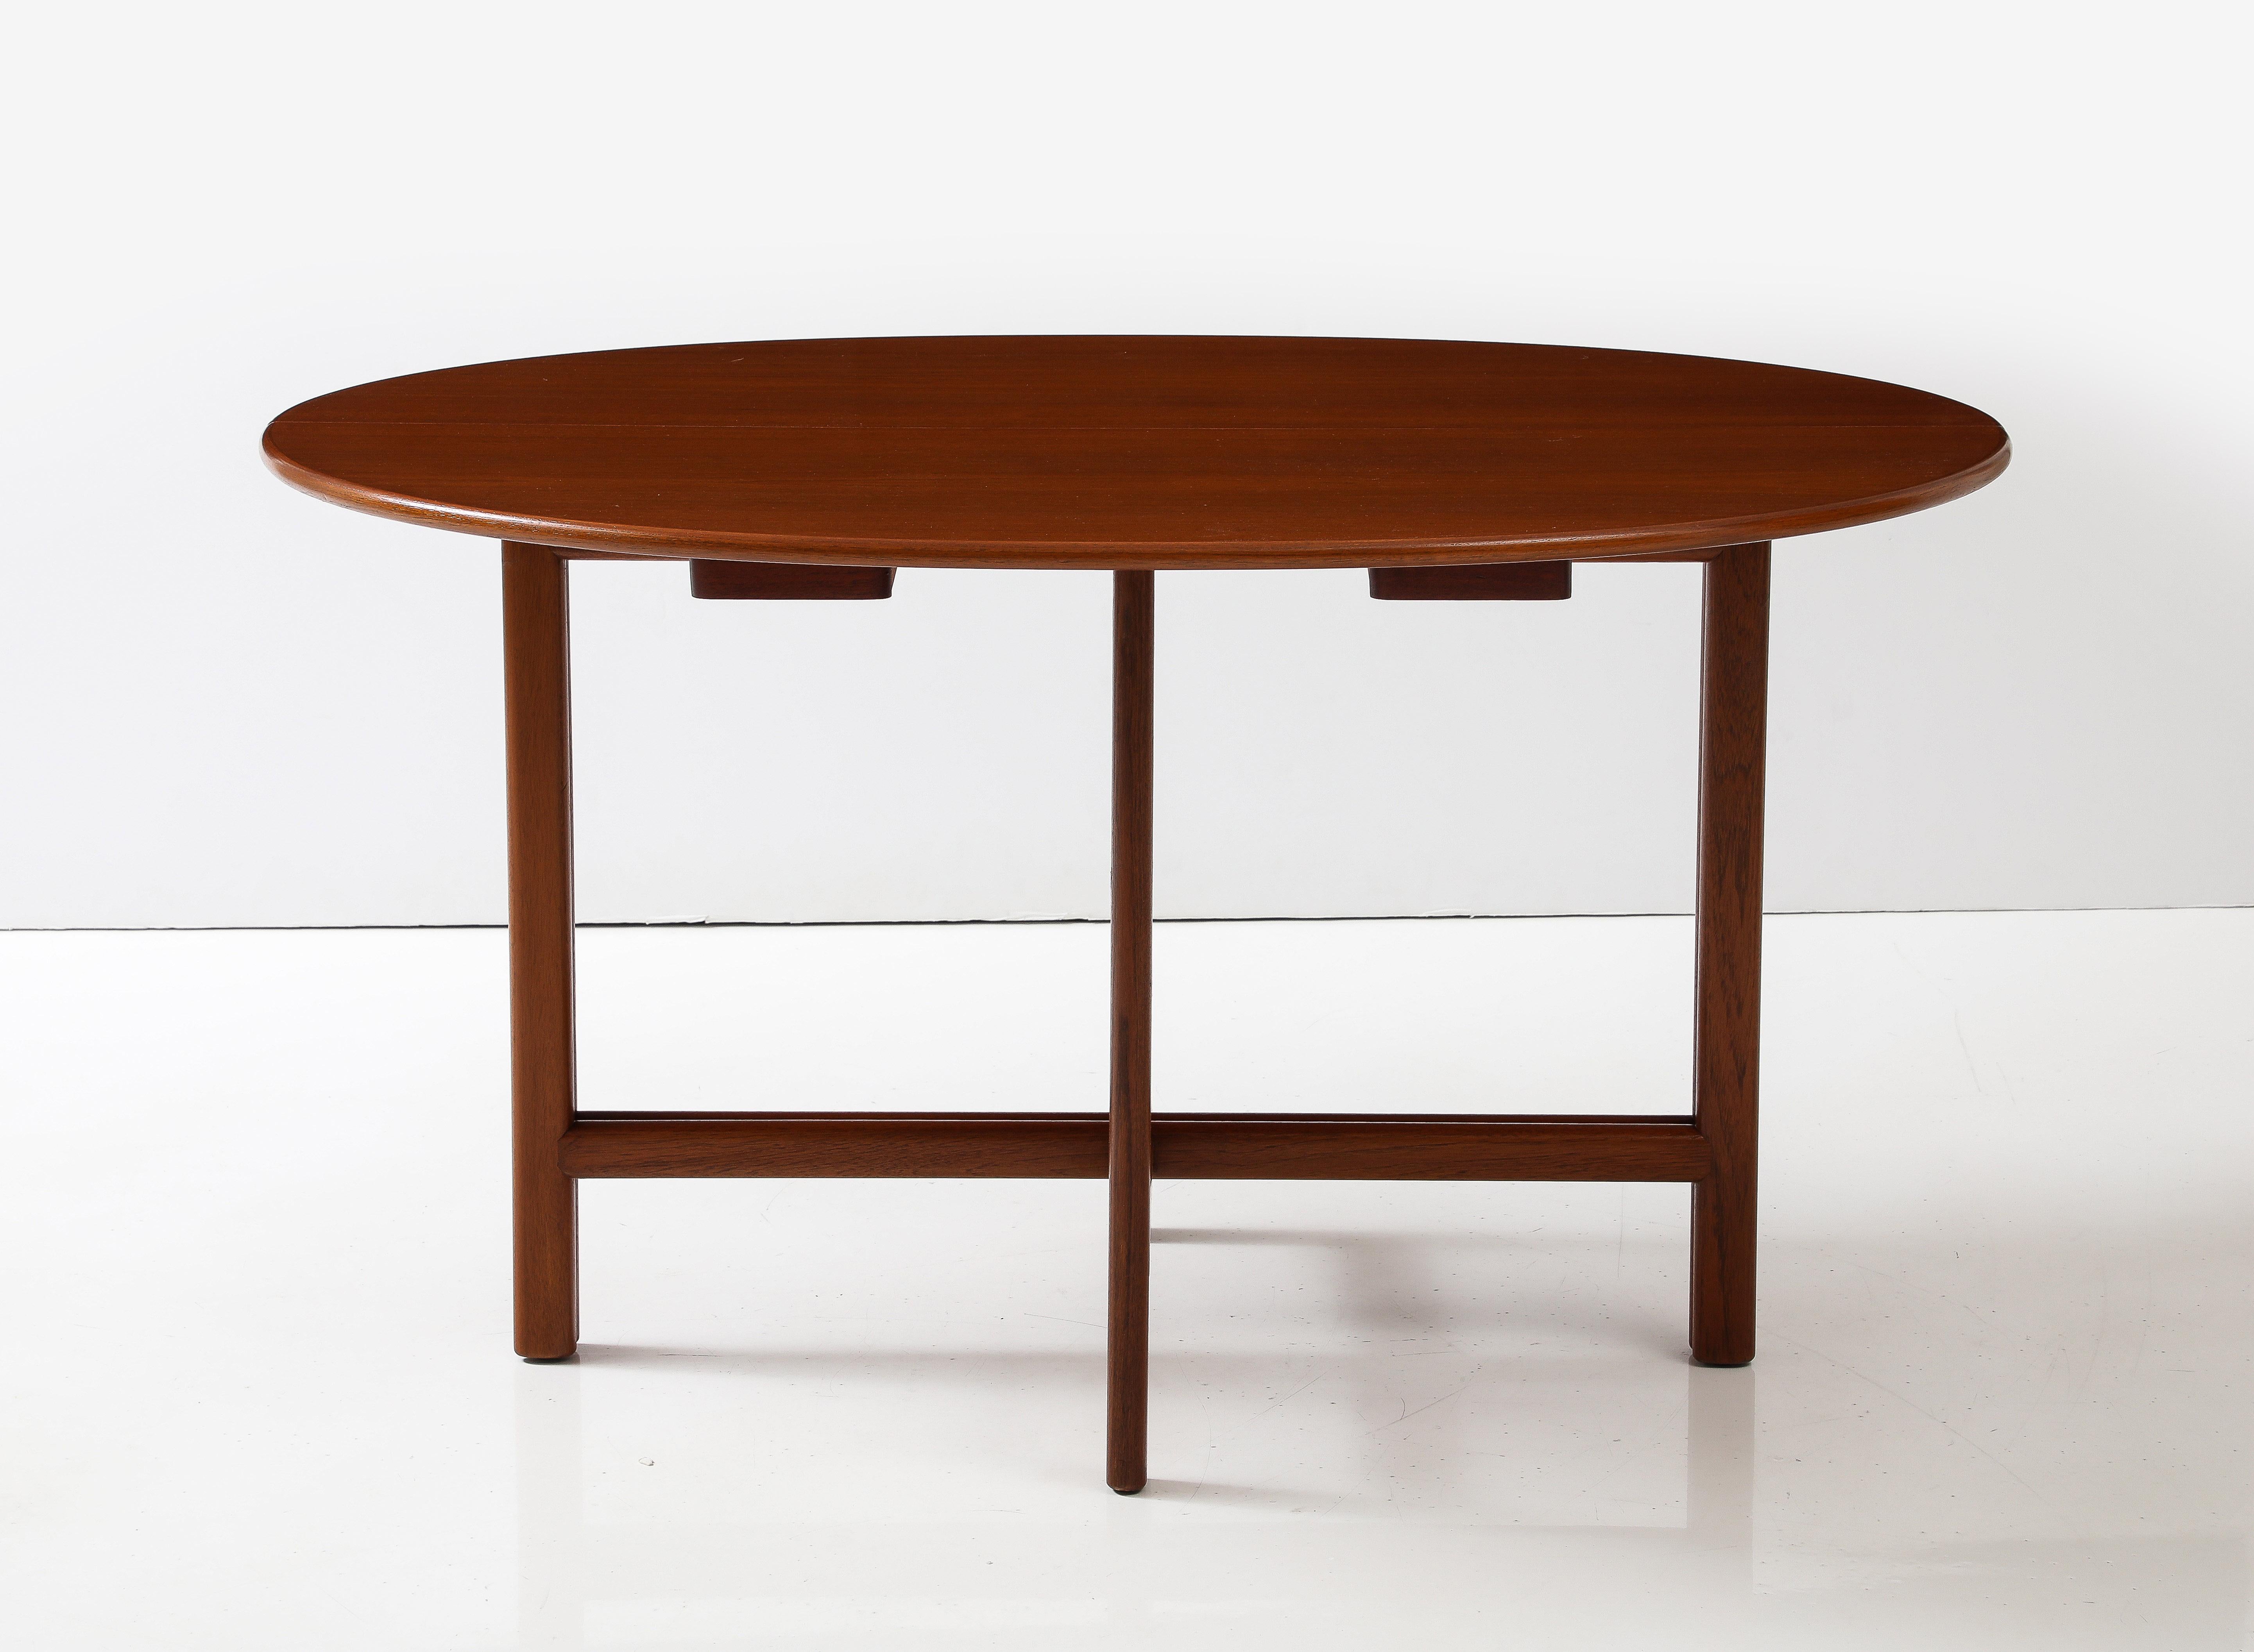 1960's Teak Dining Table Designed By Karl-Erik Ekselius For JOC With 3 Leaves For Sale 1